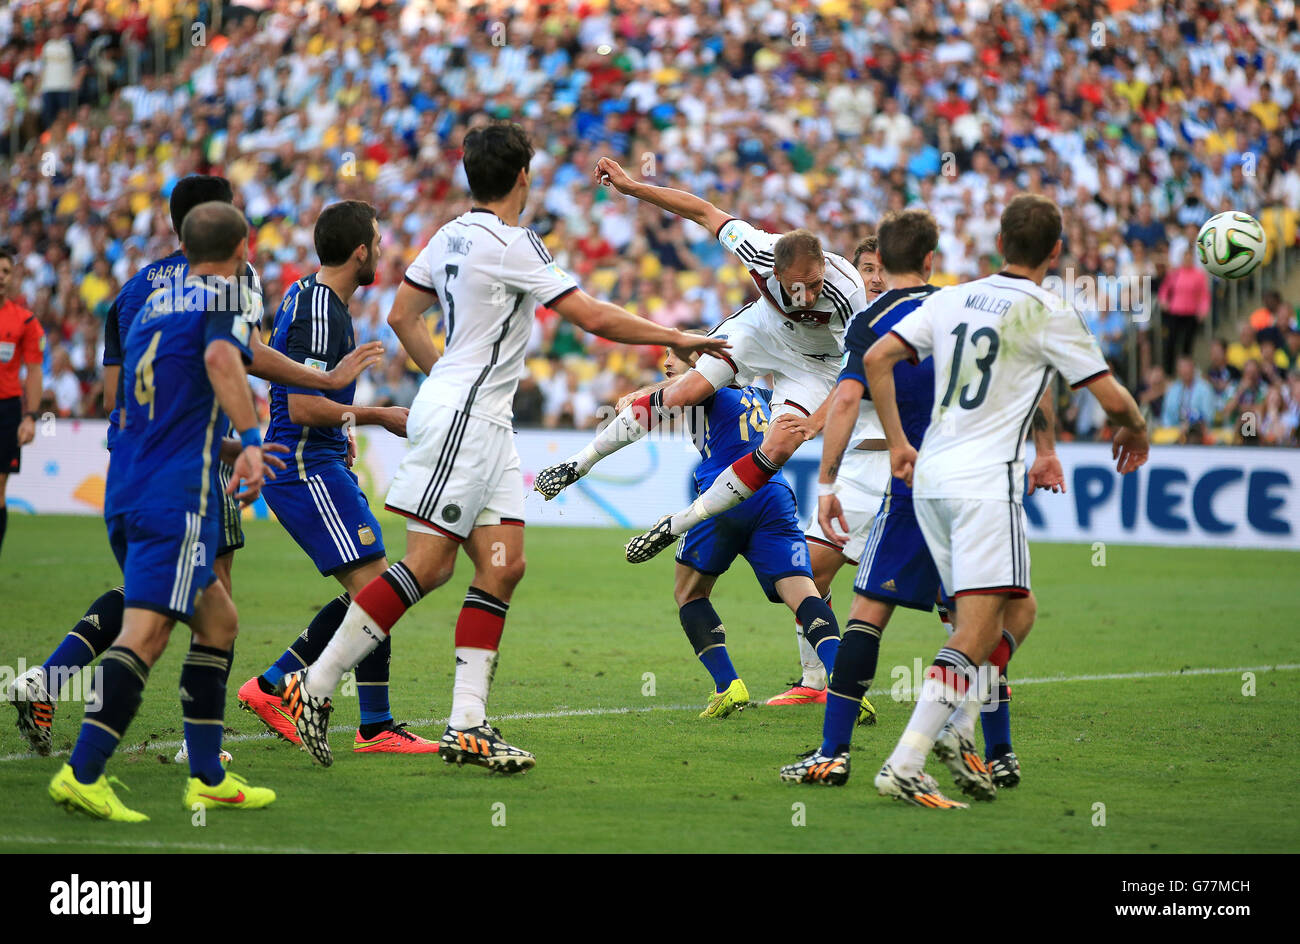 Soccer - FIFA World Cup 2014 - Final - Germany v Argentina - Estadio do Maracana. Germany's Benedikt Howedes (centre) with a headed effort on goal Stock Photo